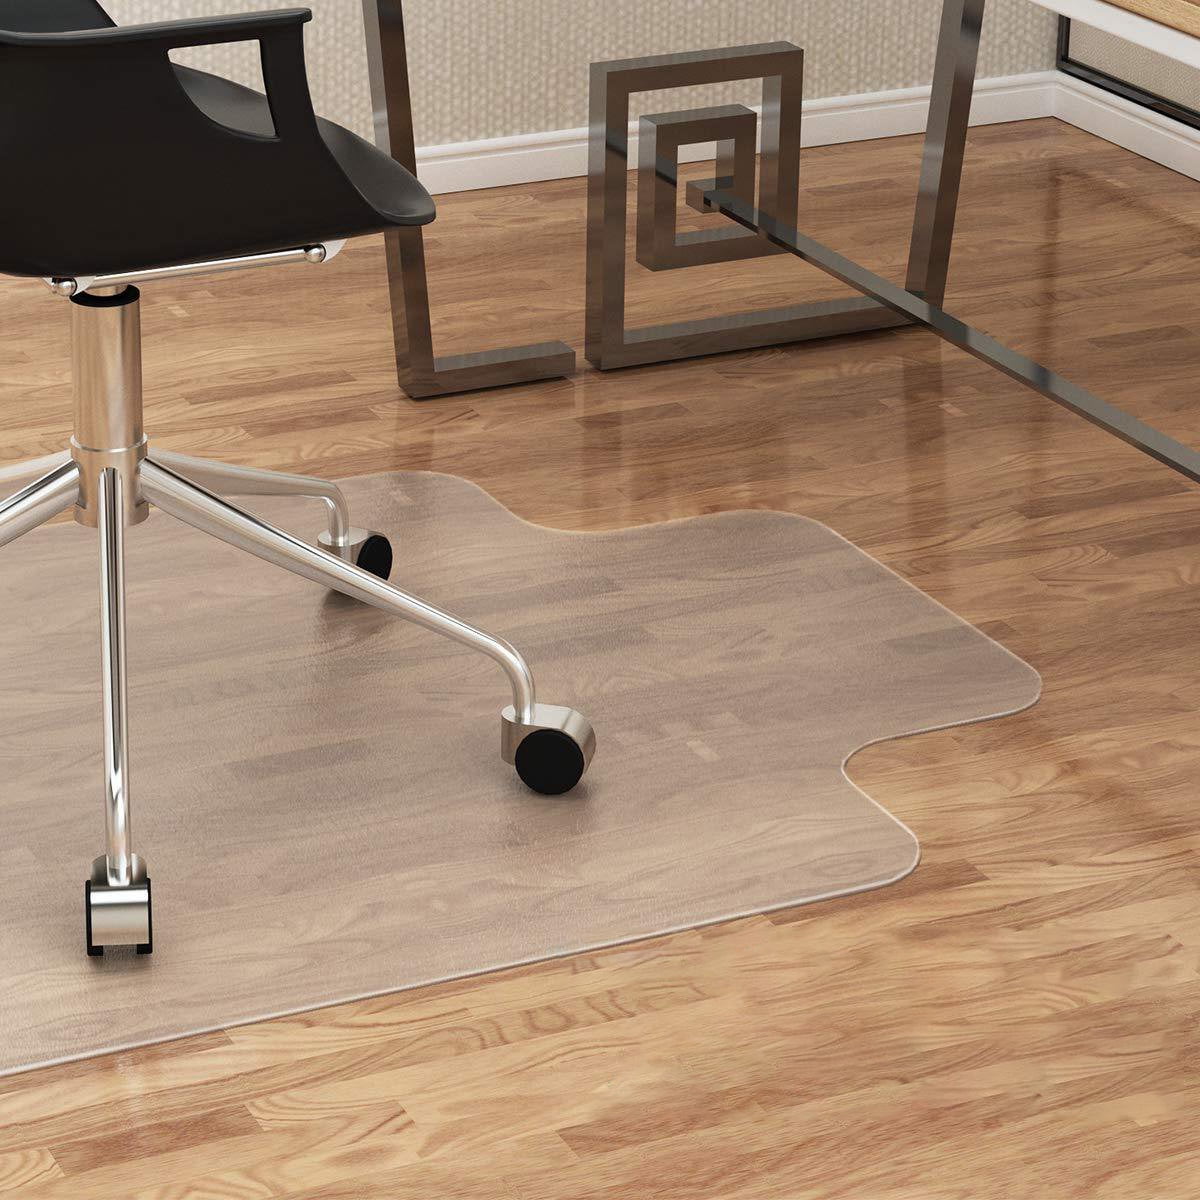 48" x 60" PVC Chair Floor Mat Home Office Protector For Hard Wood Floors USA 